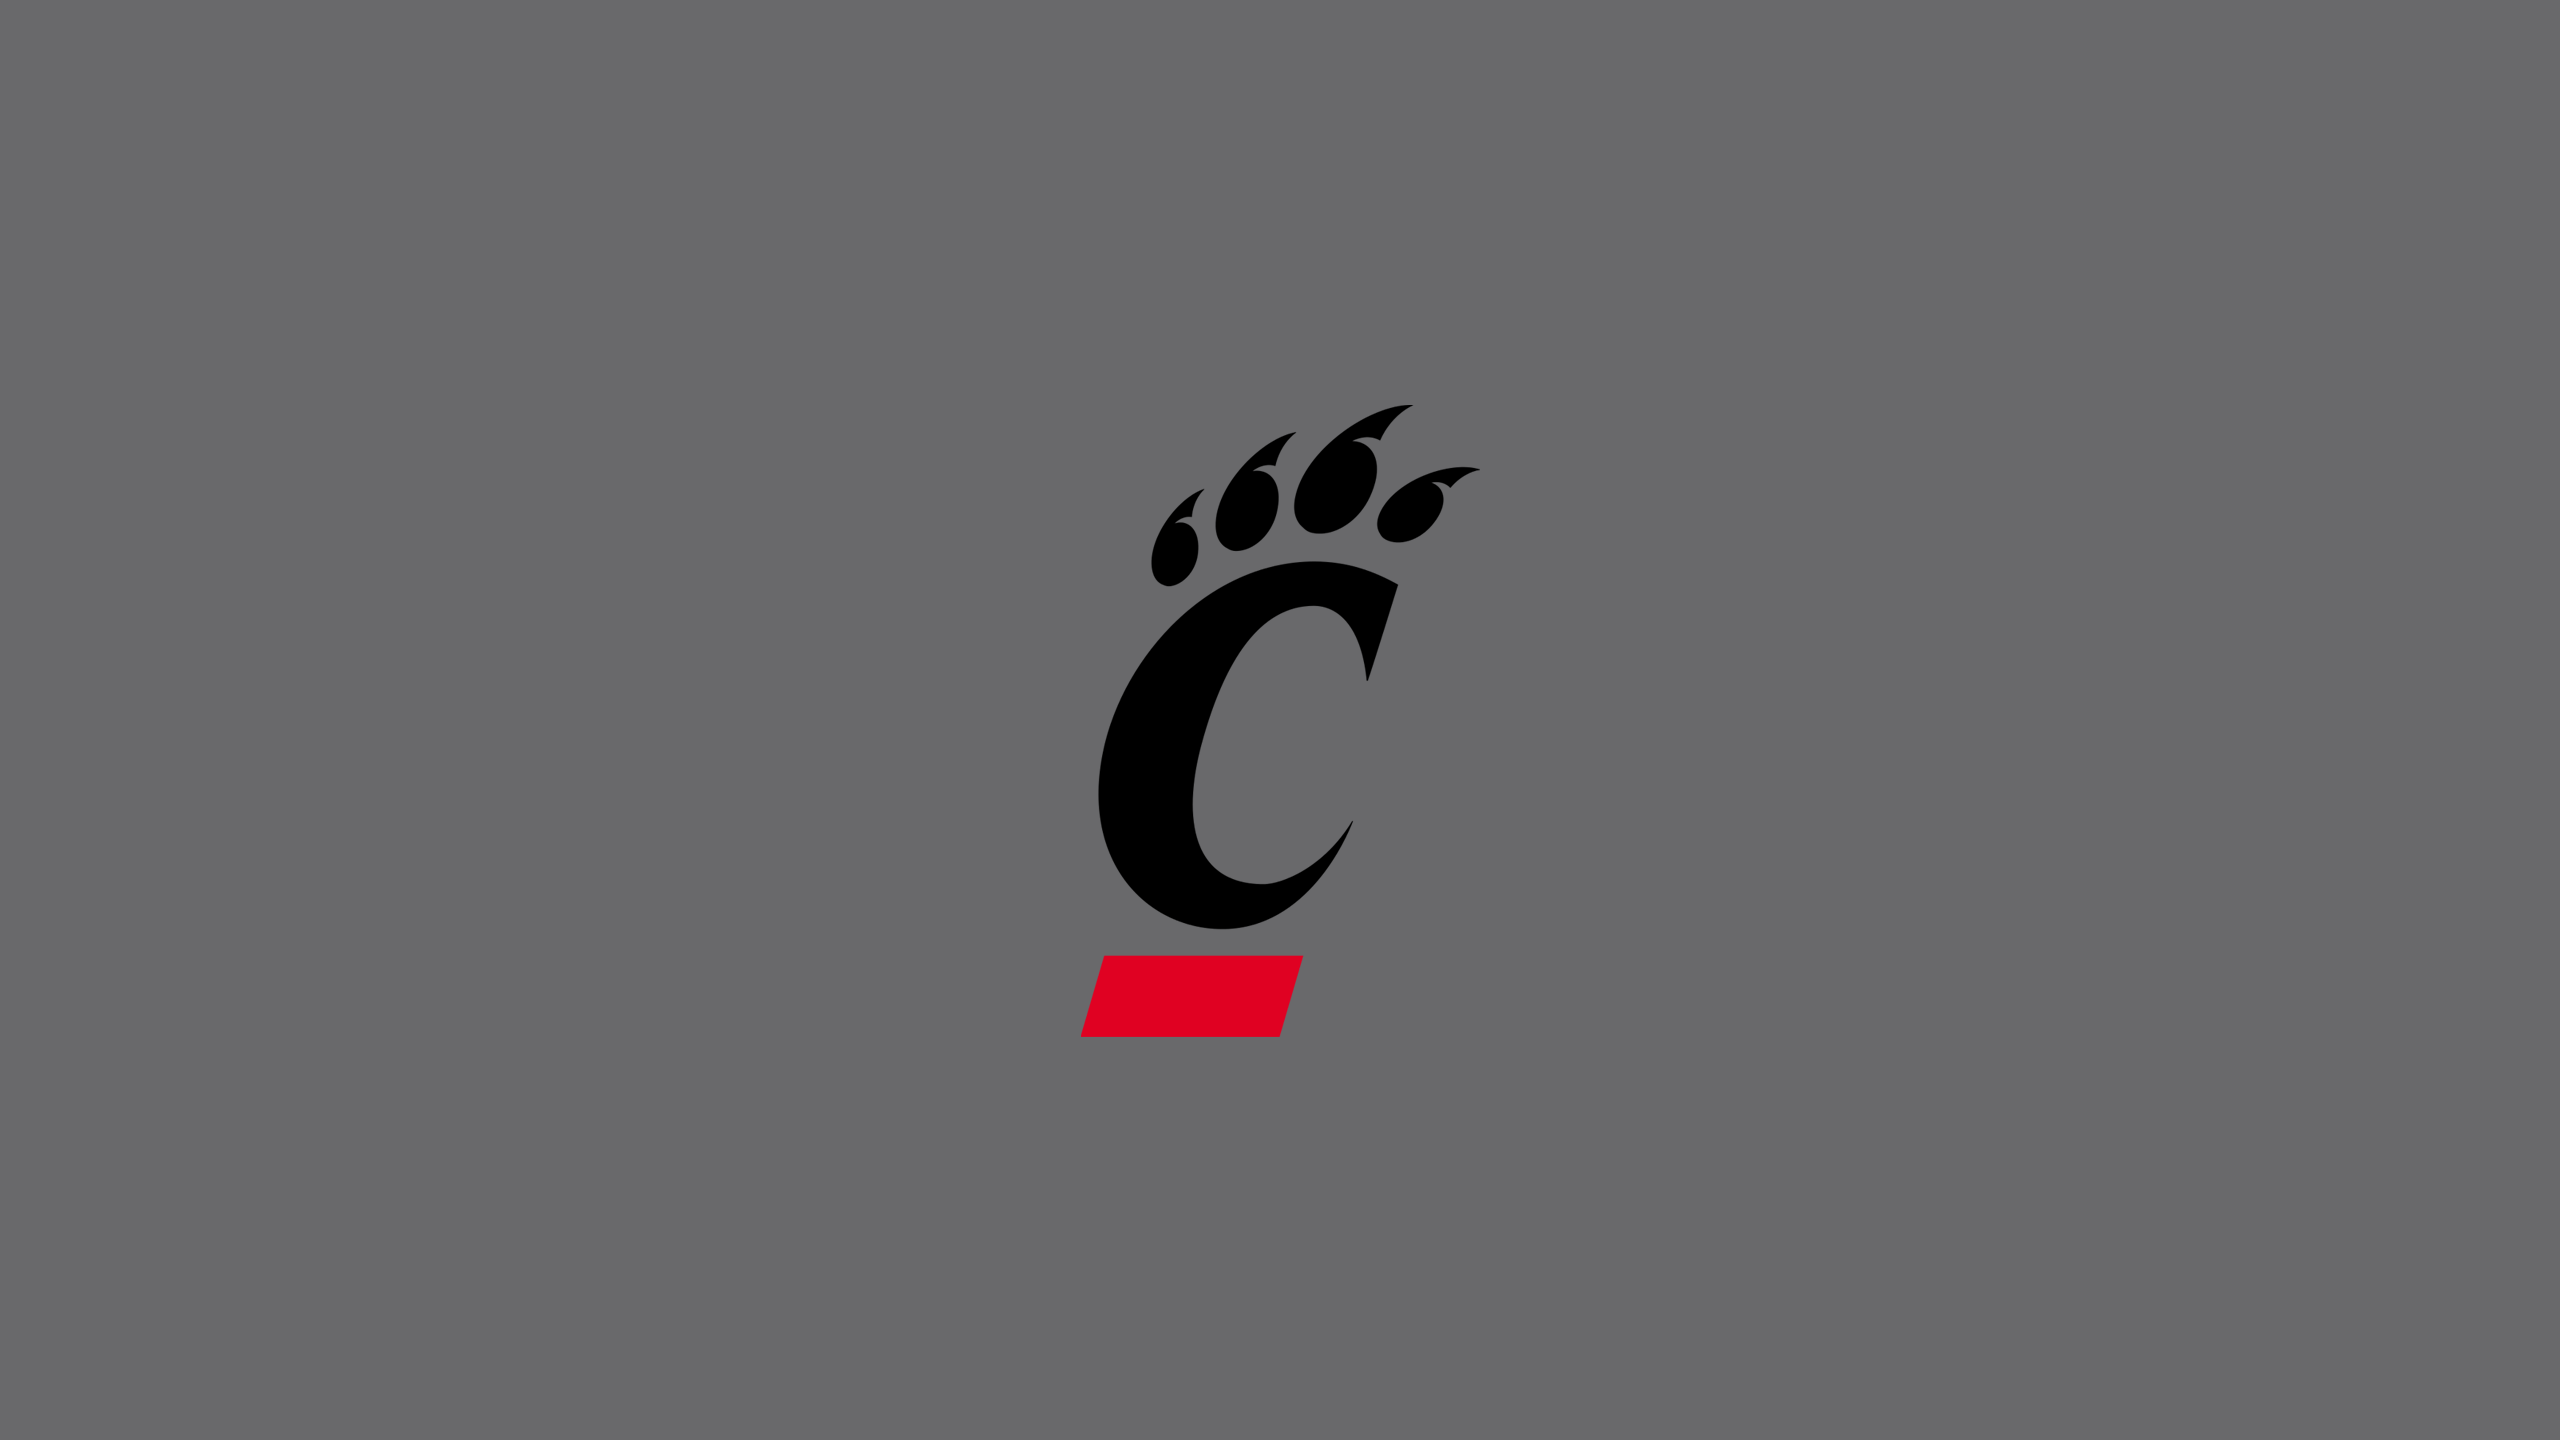 Cincinnati Bearcats Basketball - NCAAB - Square Bettor